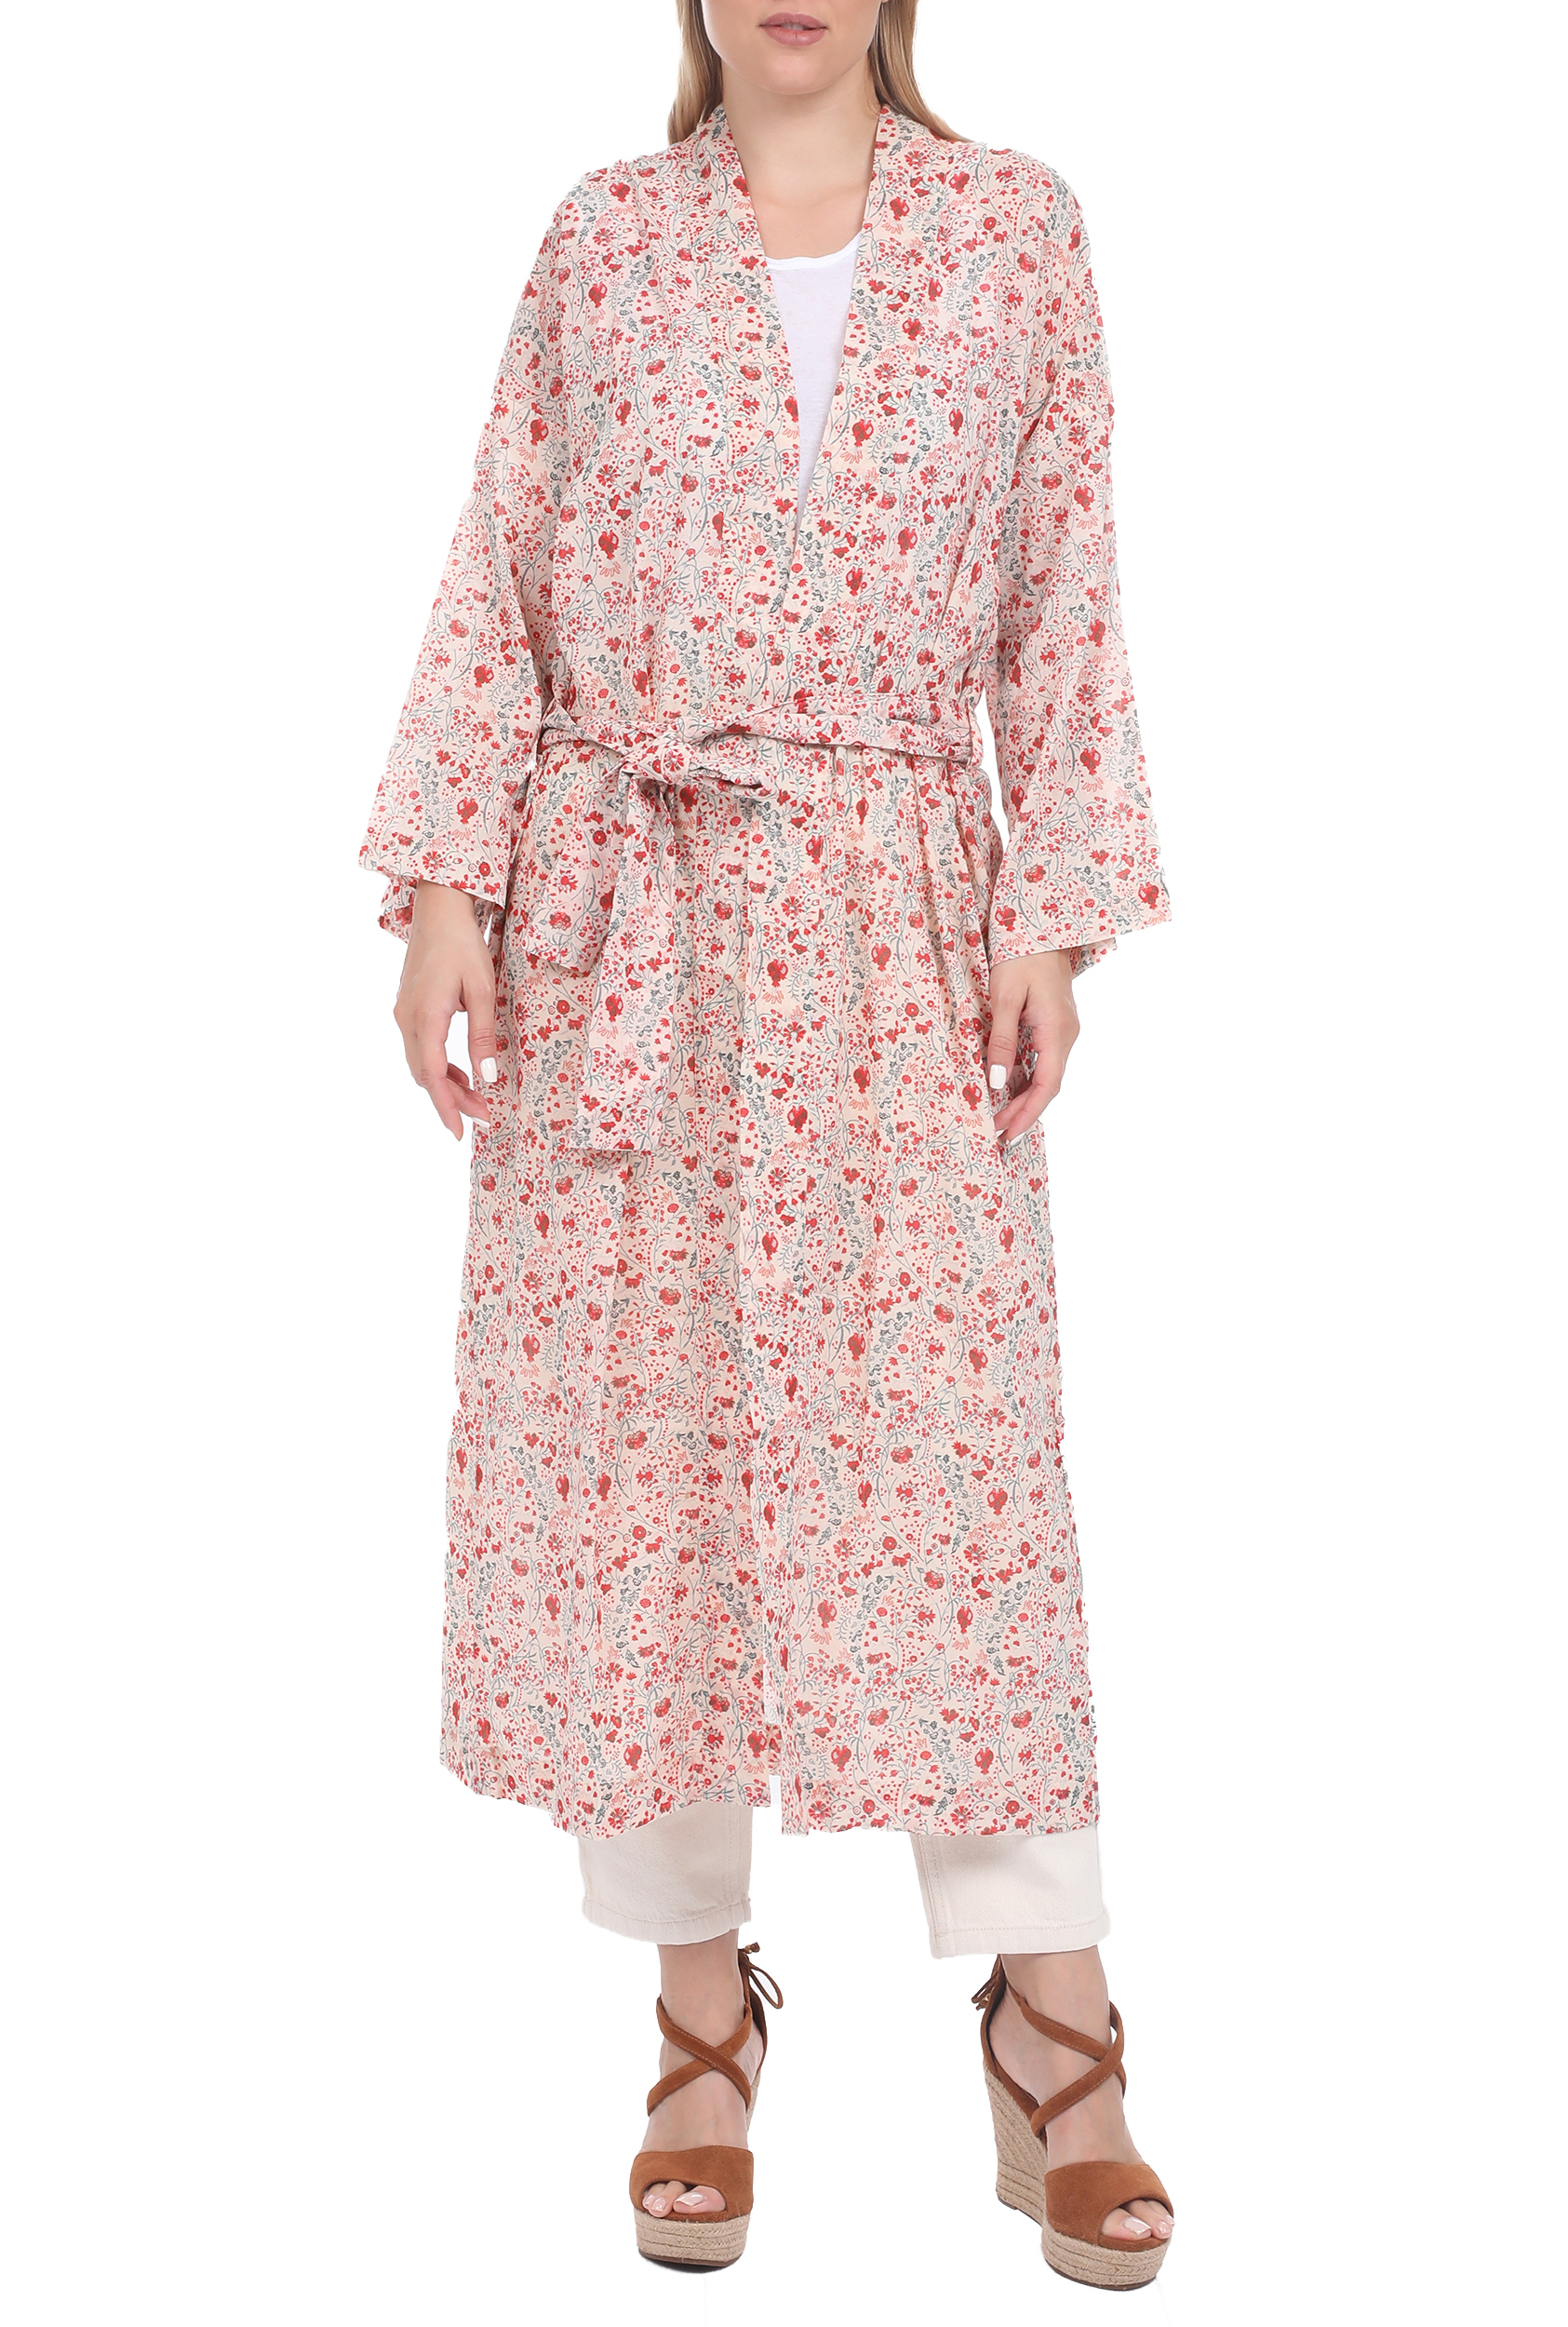 MABE – Γυναικείο μακρύ κιμονό MABE KELBY DRESSING GOWN μπεζ κόκκινο 1811565.0-0000